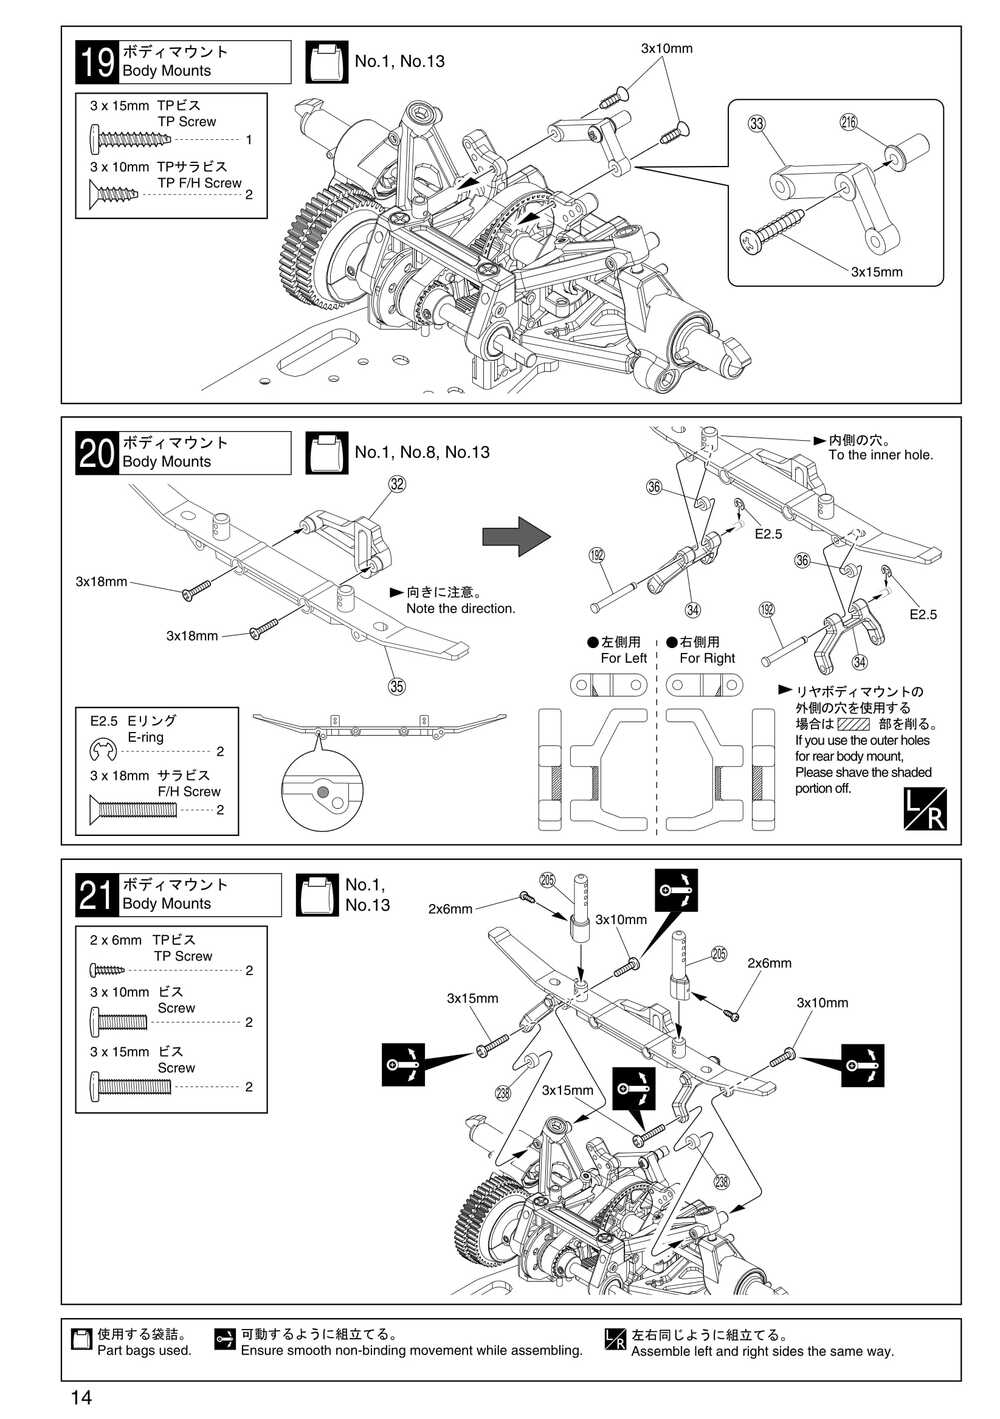 Kyosho - 31041 - Fantom Sports - Manual - Page 14